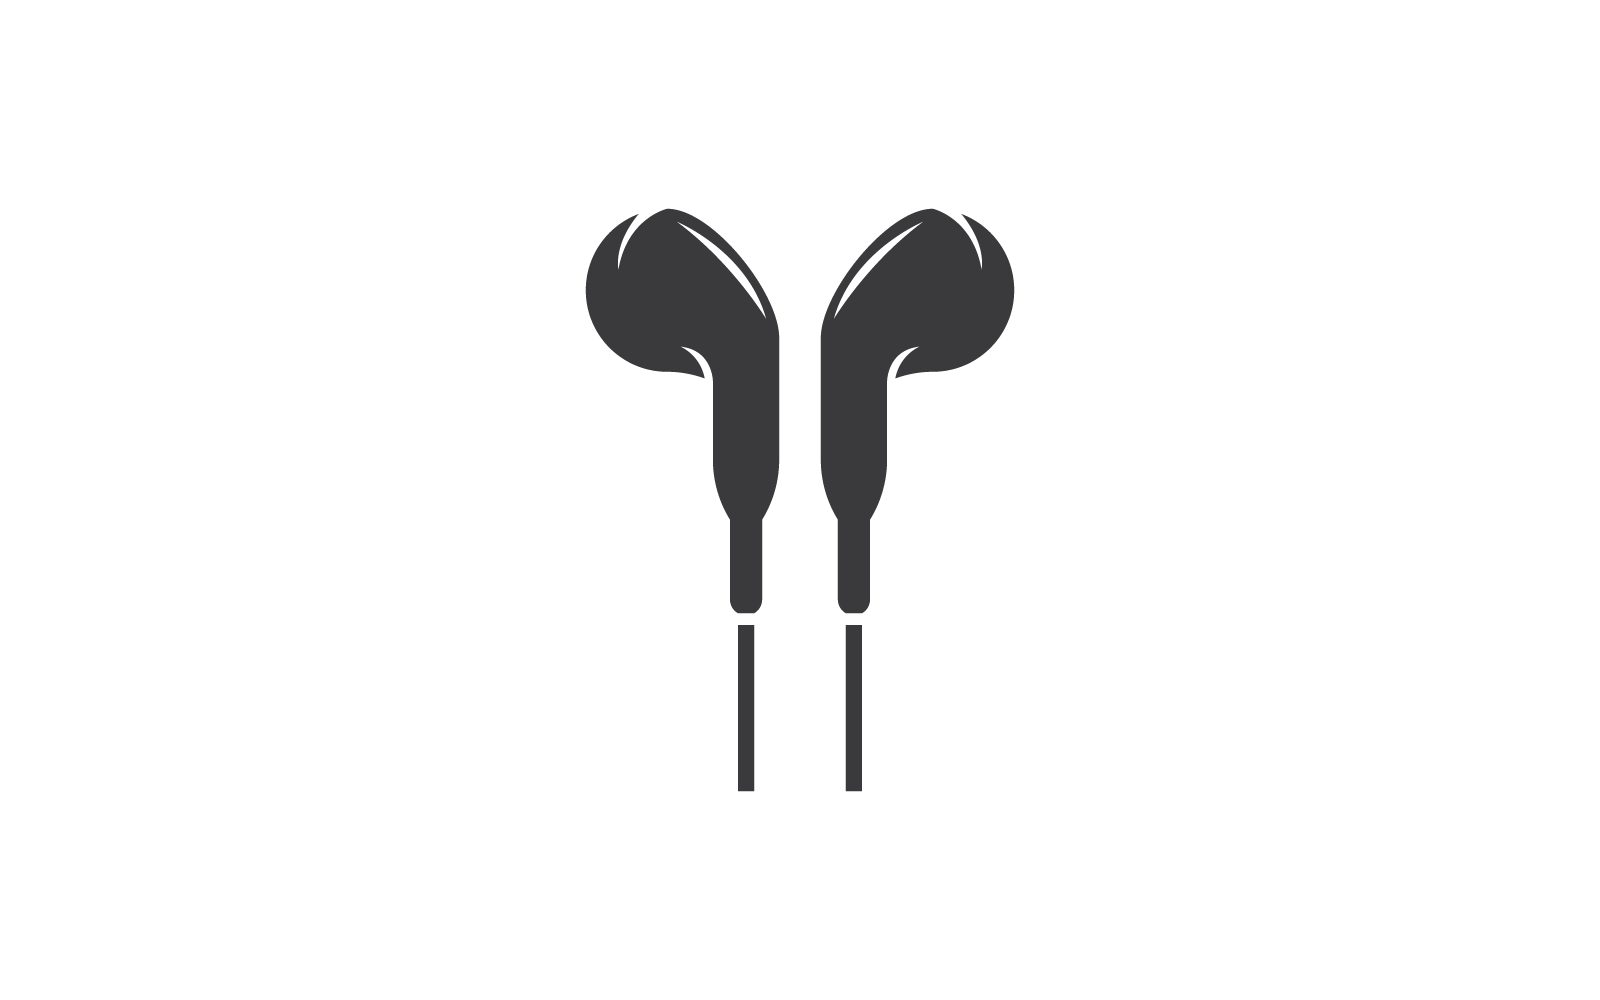 Sluchátka, sluchátka ilustrace ikonu vektorové plochý design